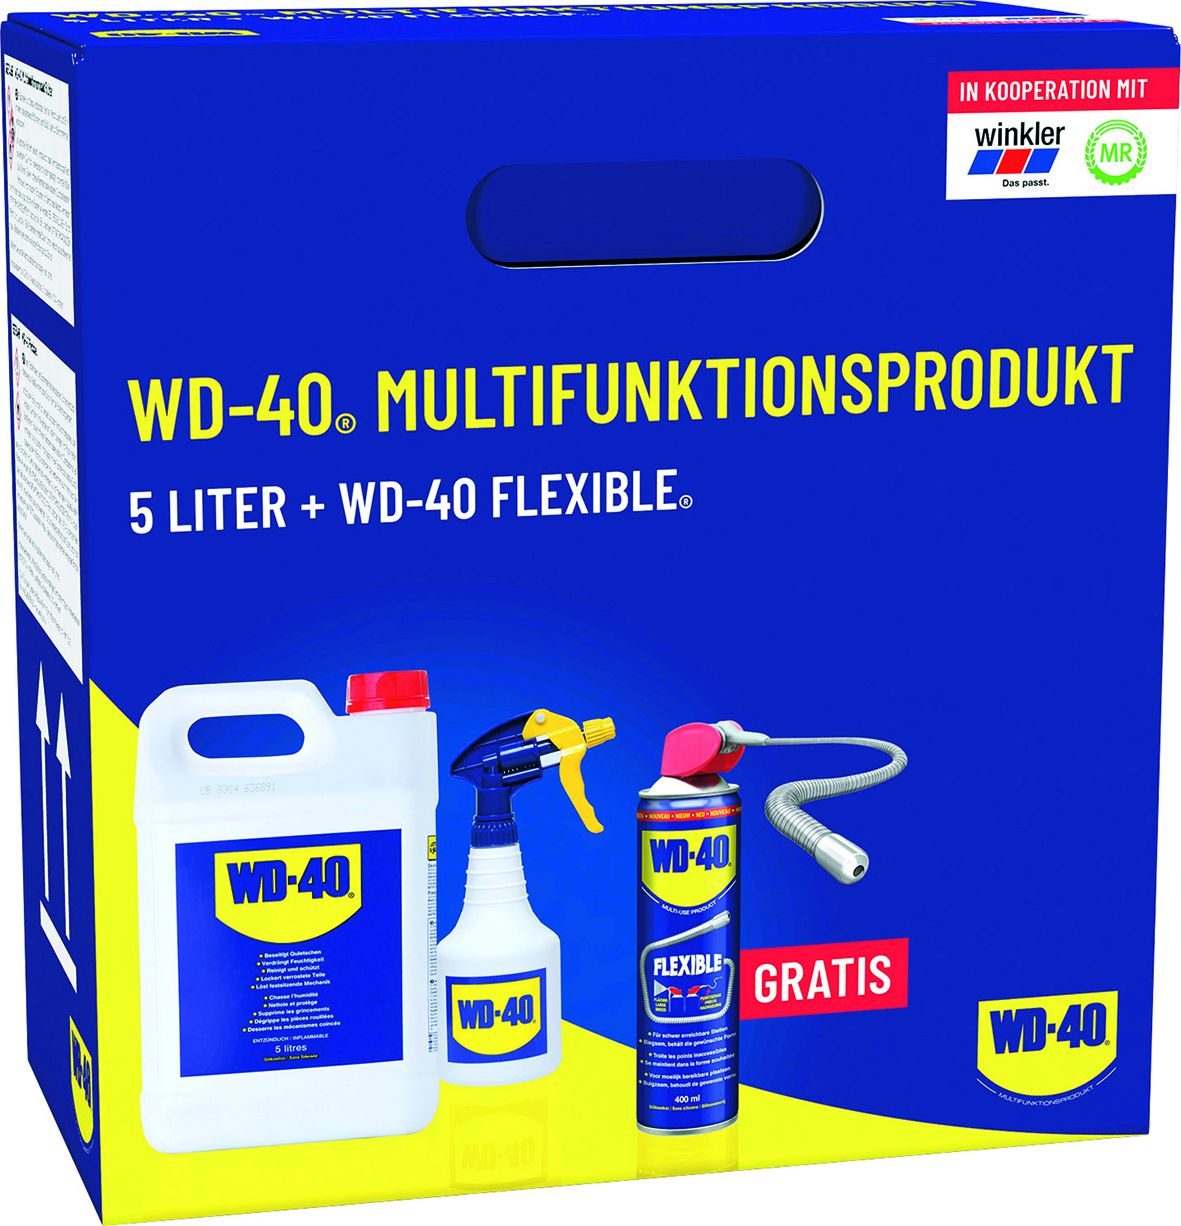 WD-40 Multifunktionsprodukt 5 Liter+ WD-40 flexible